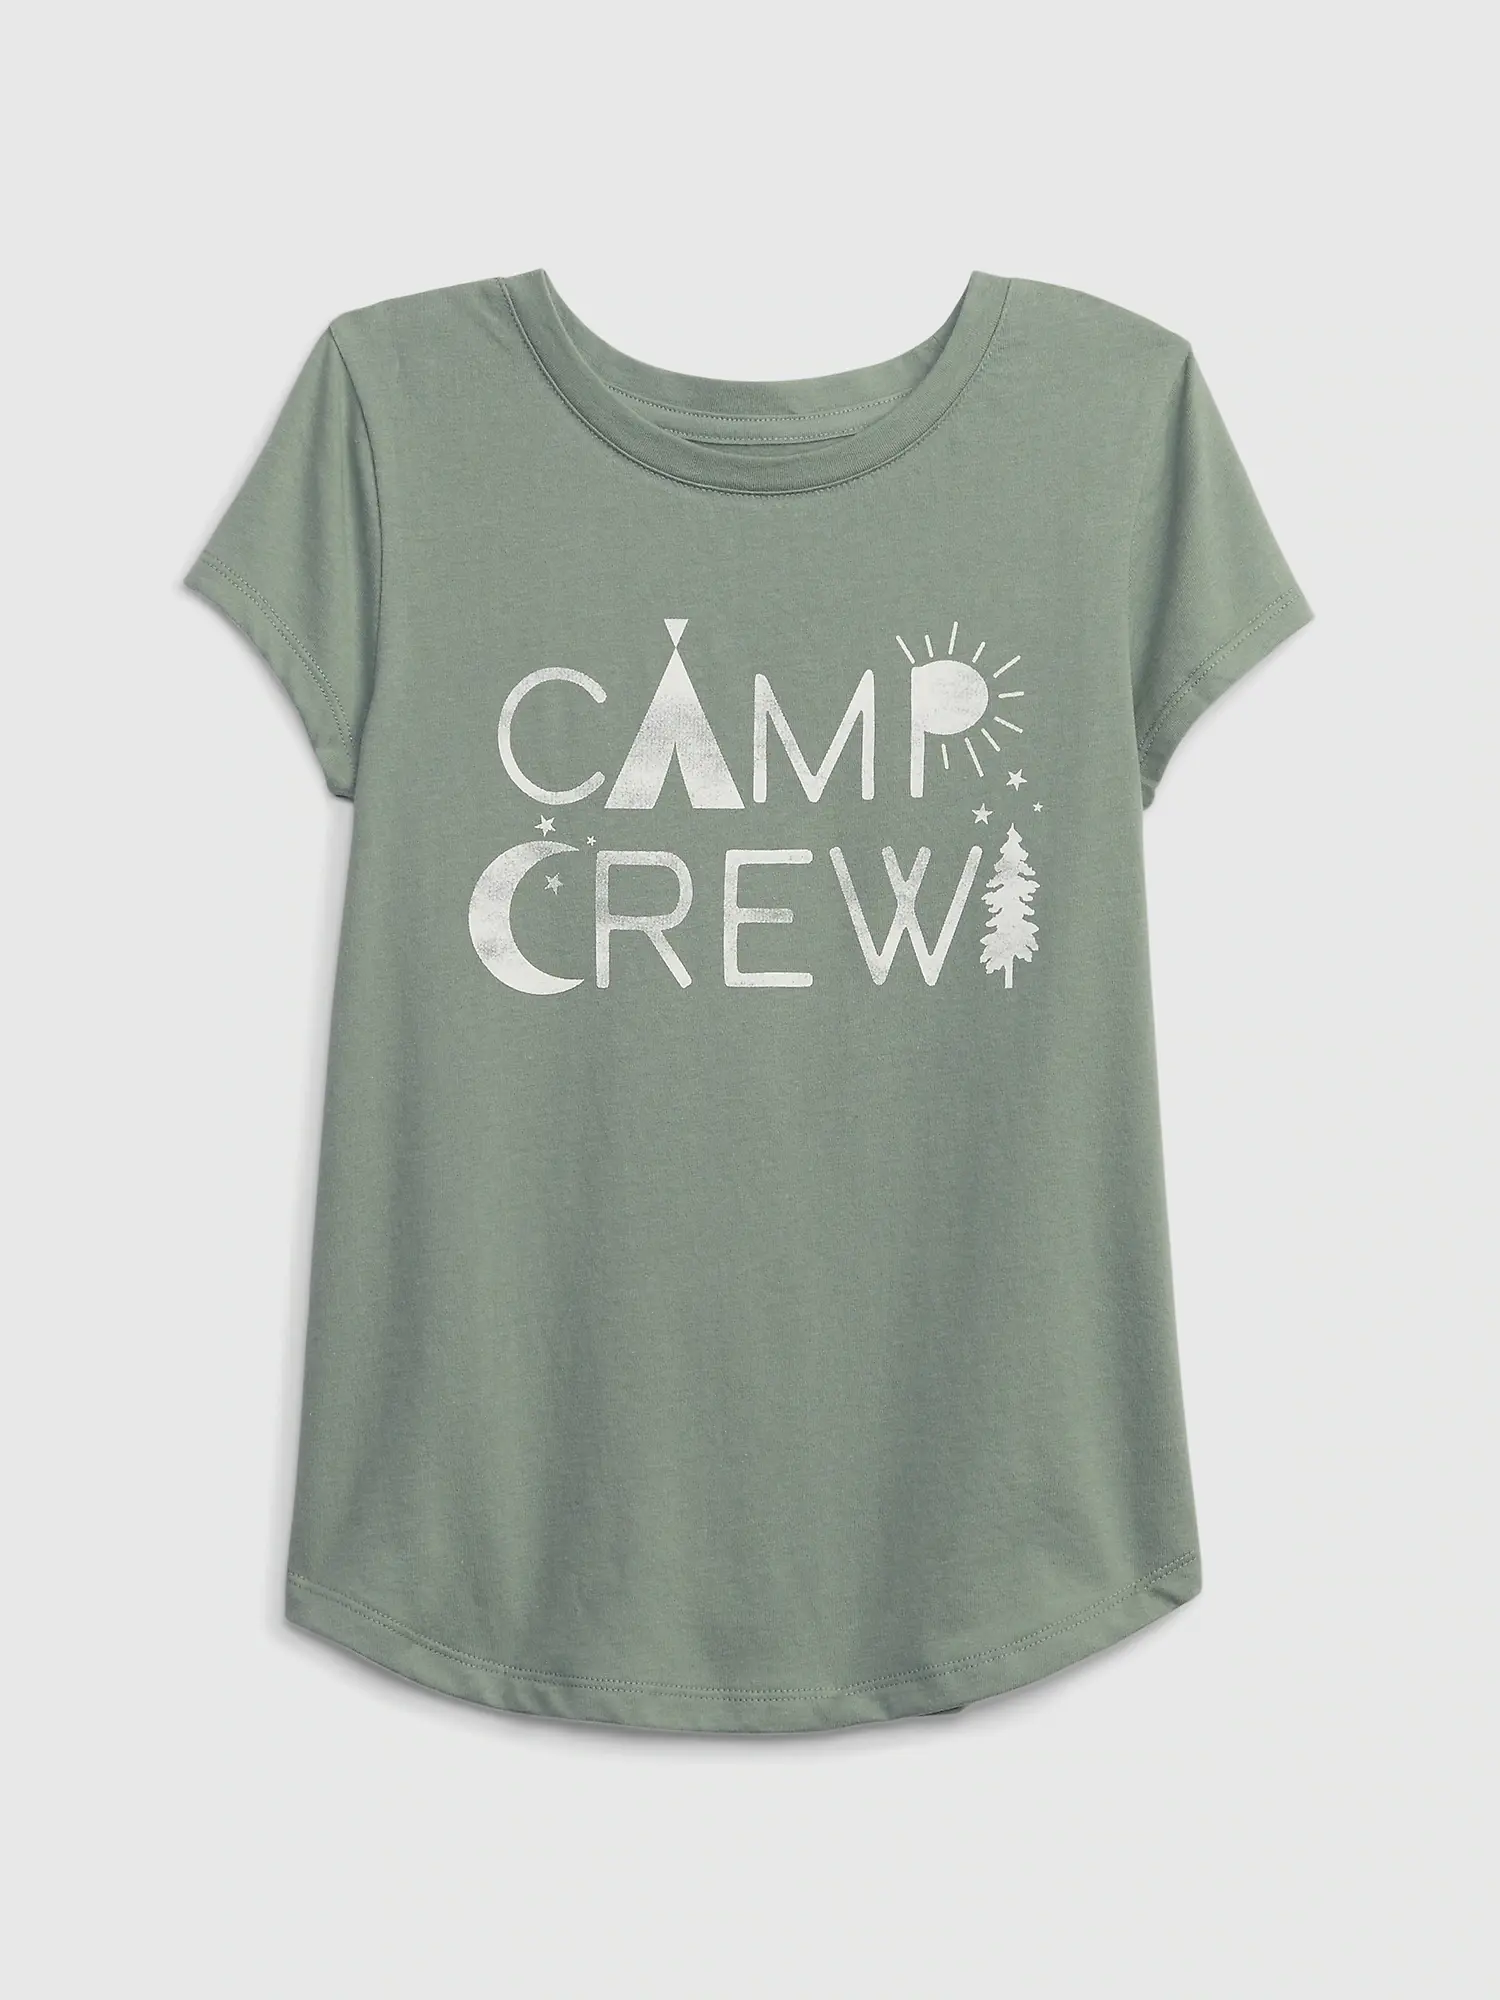 Gap Kids 100% Organic Cotton Graphic T-Shirt green. 1